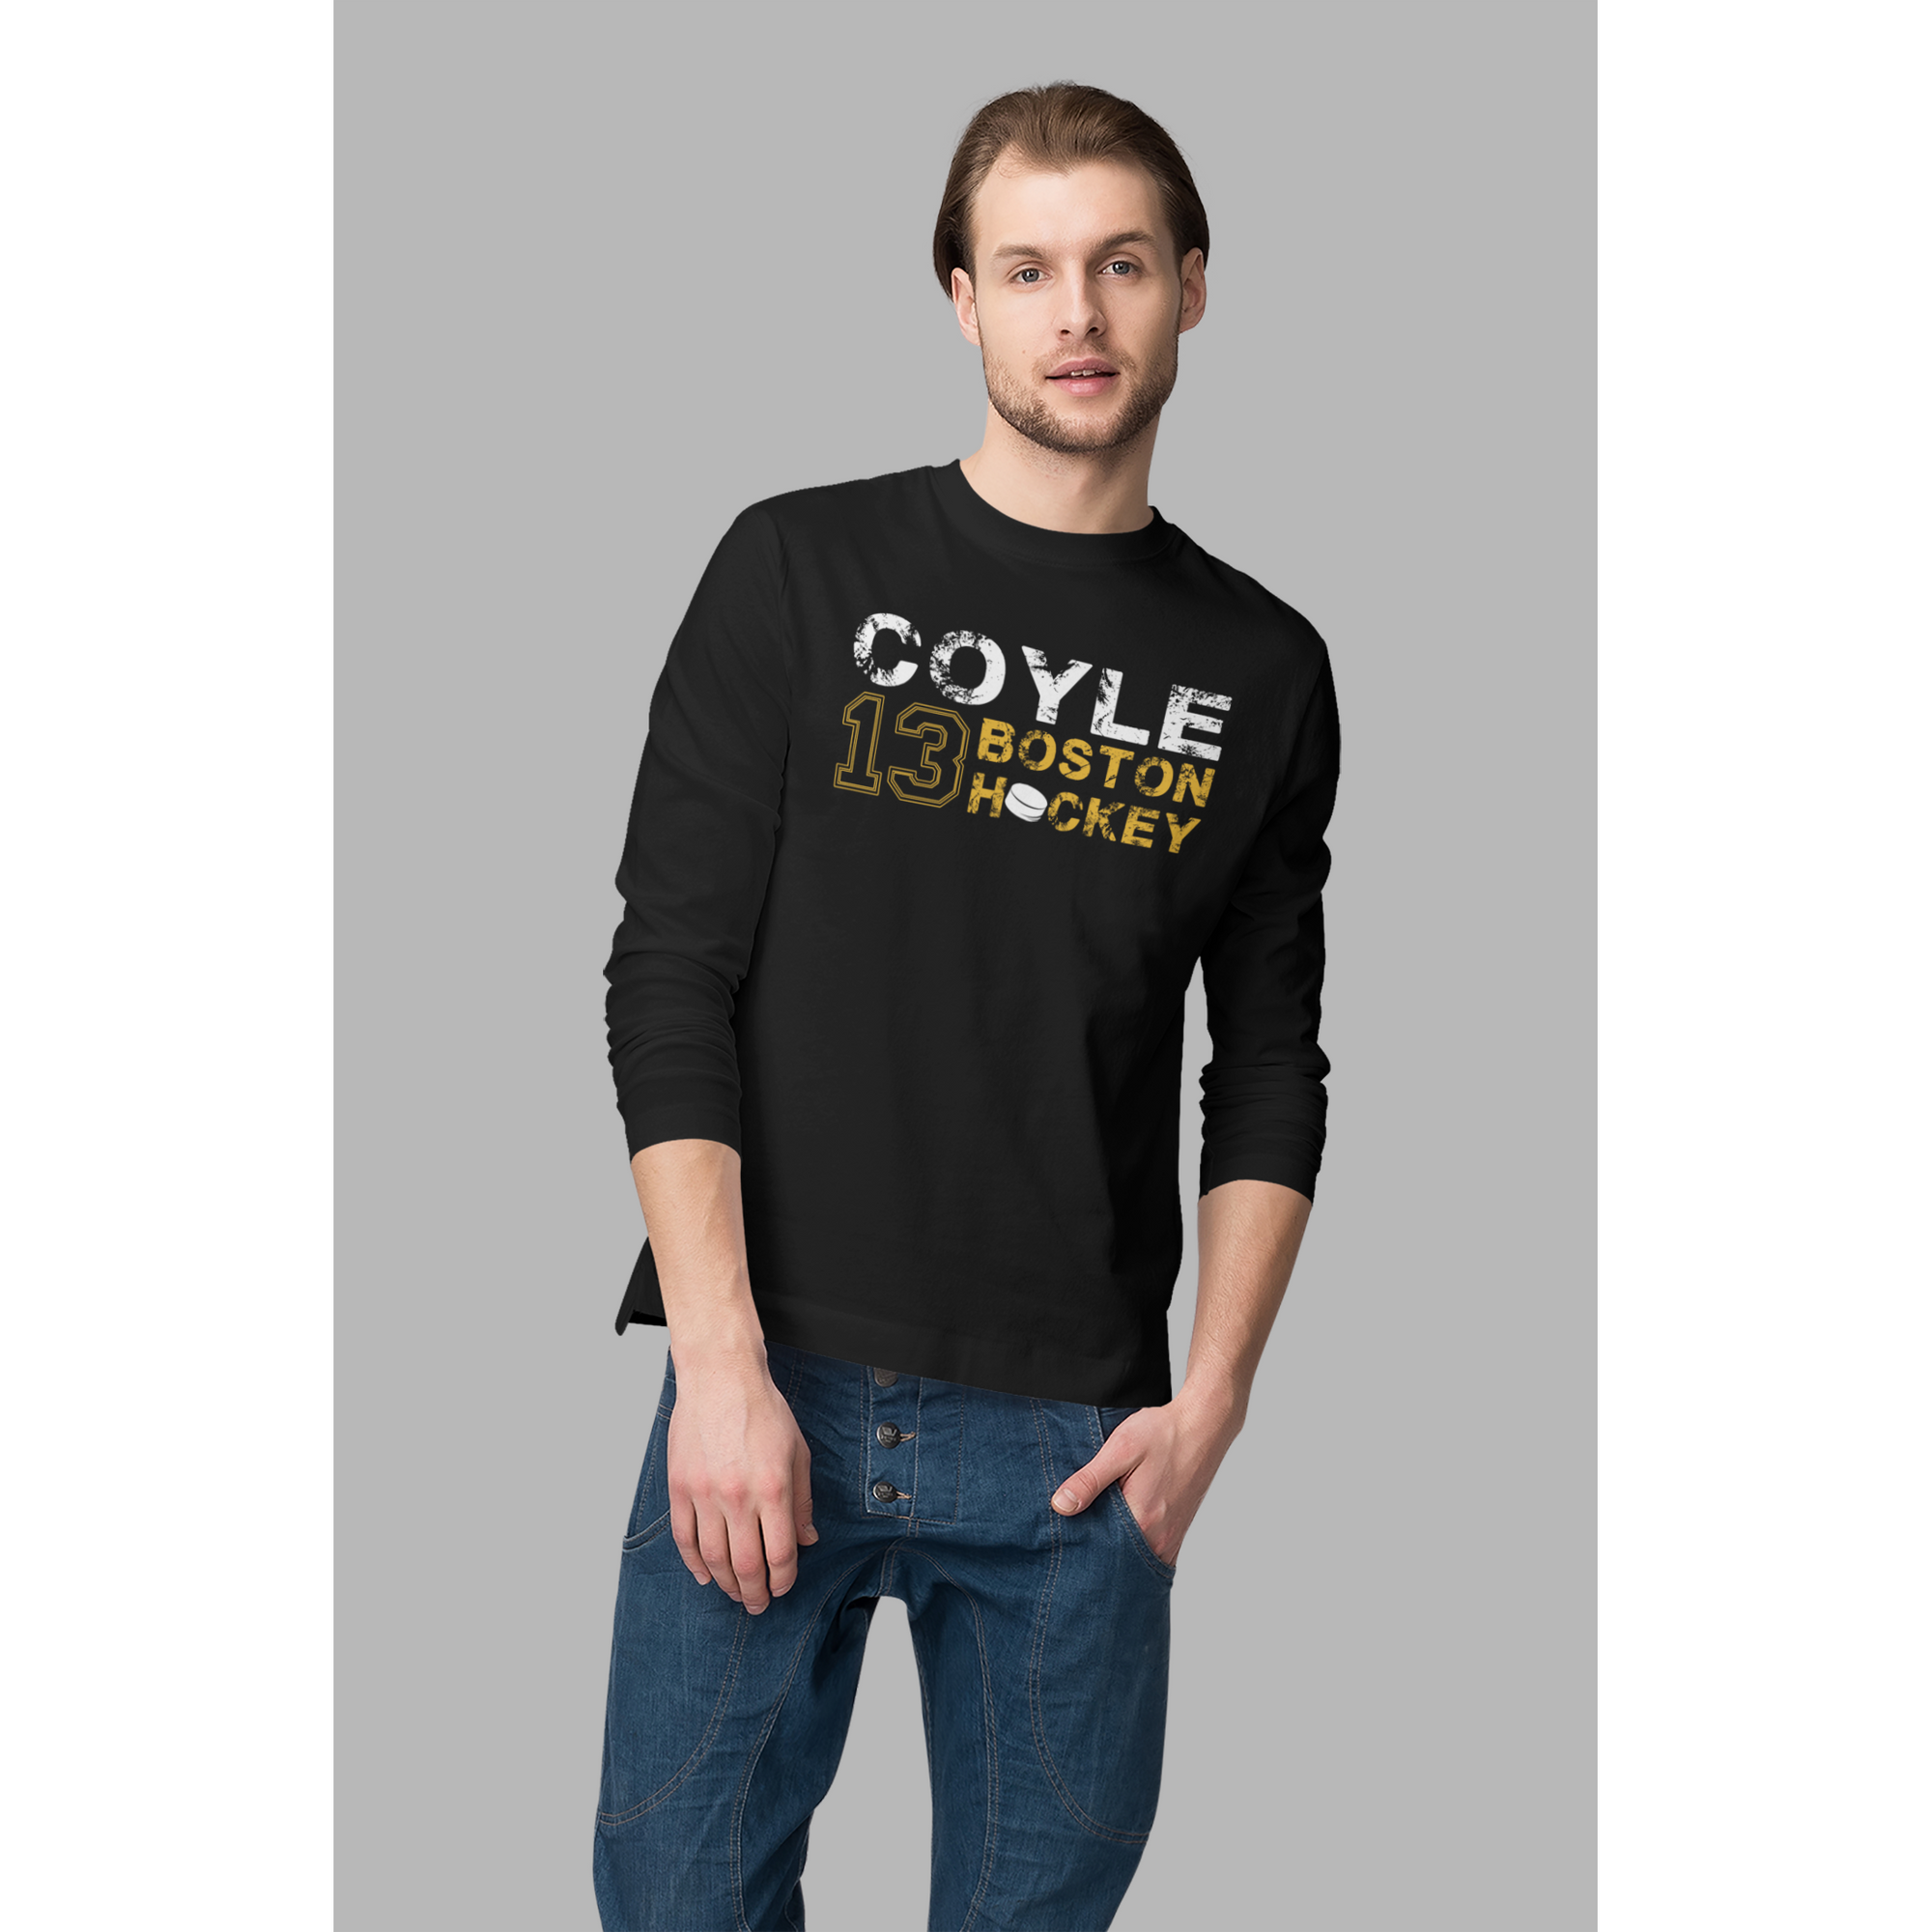 Charlie Coyle Shirt  Boston Bruins Charlie Coyle T-Shirts